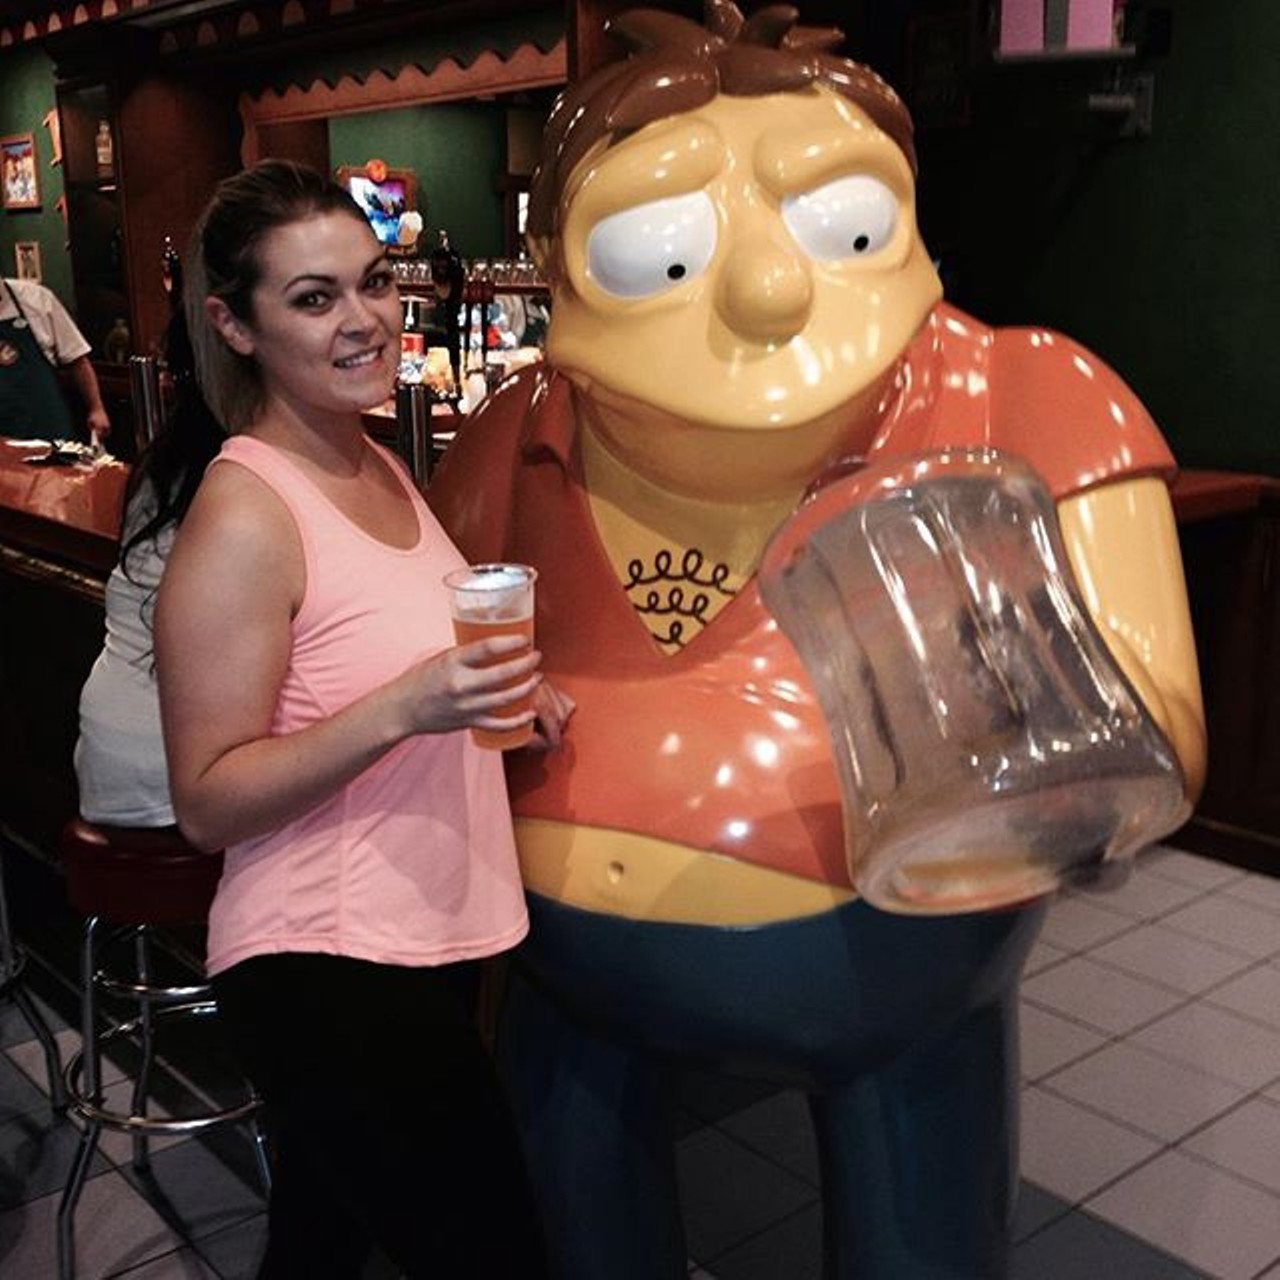 Instagram user clairej43 was drinkin' Duff at Moe's Tavern.